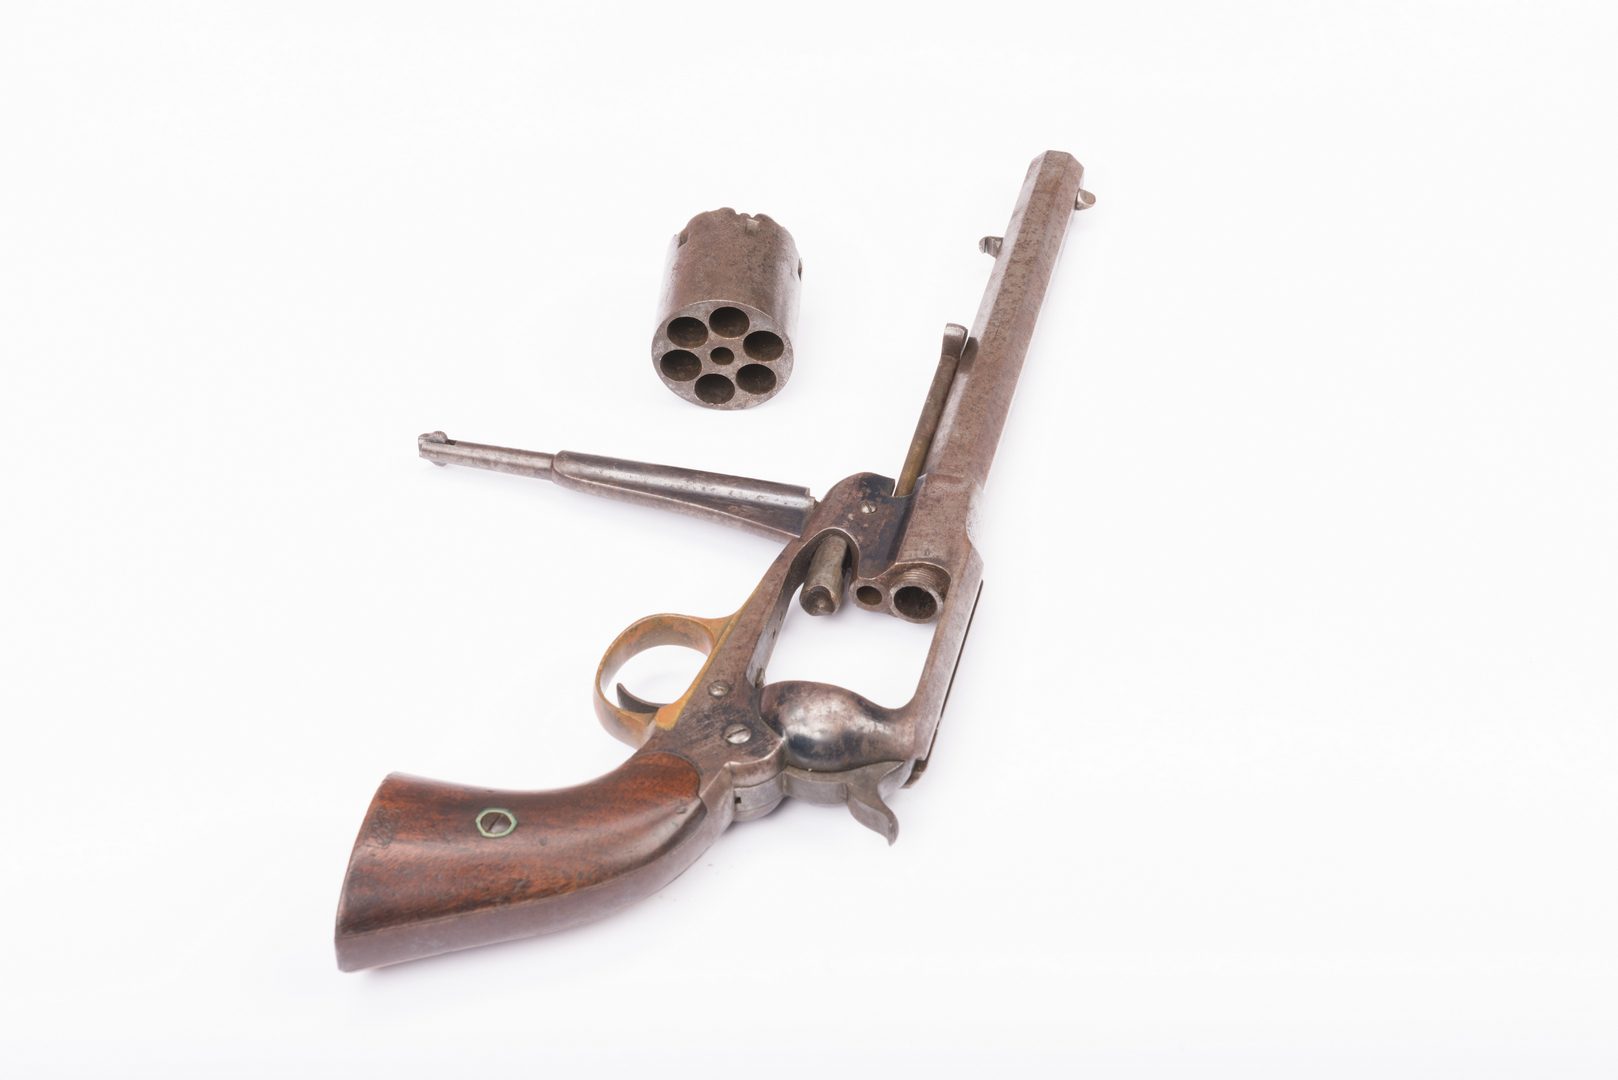 Lot 502: 2 Remington New Model 1858 Revolvers